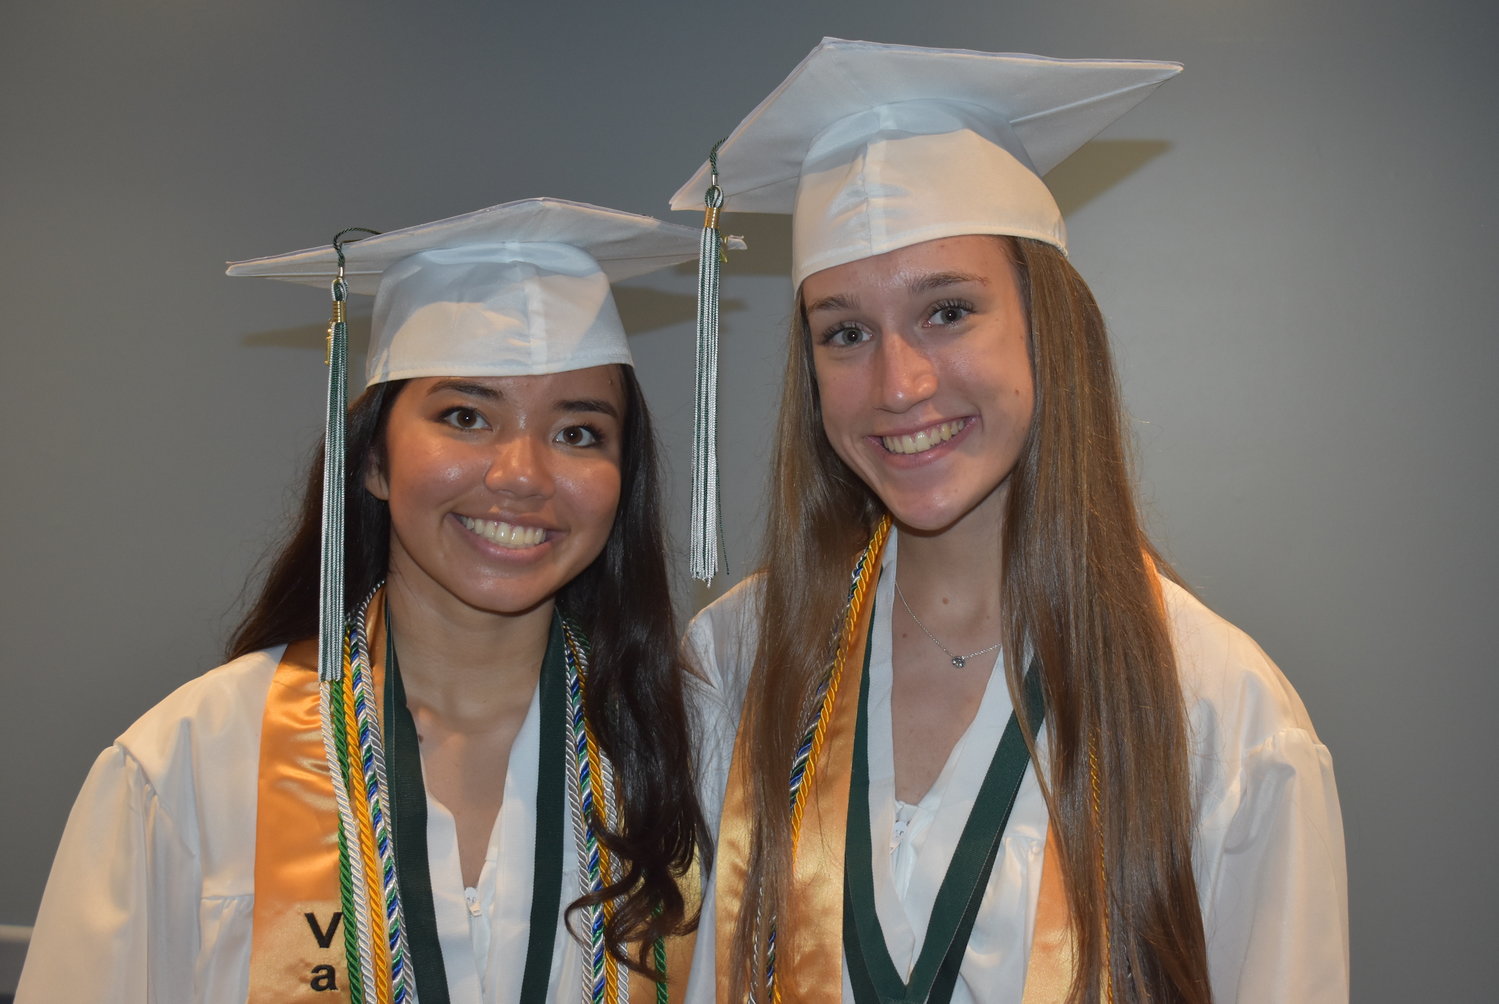 This year’s top graduates were Valedictorian Julia Gambino and Salutatorian Kaylee Sanderson.